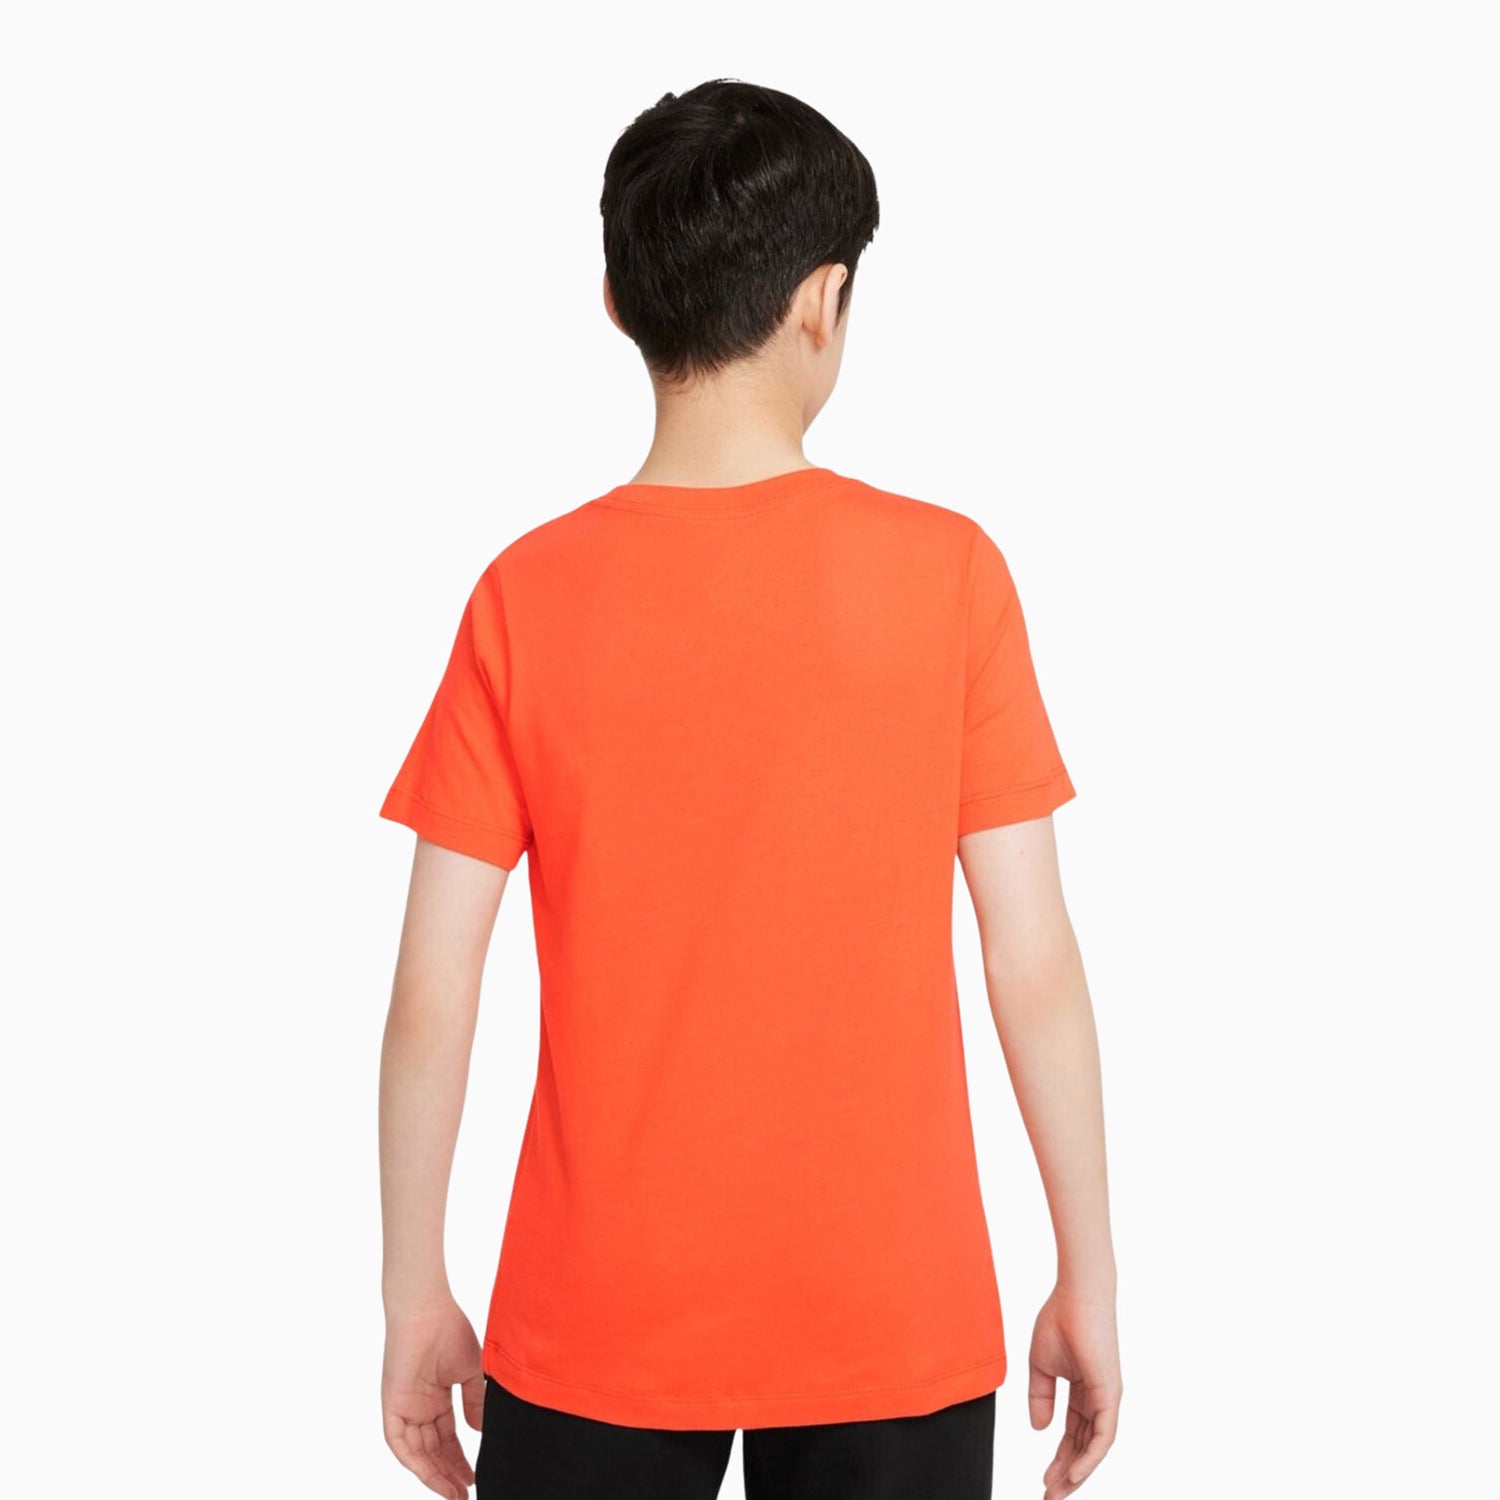 nike-kids-sportswear-short-sleeve-t-shirt-ar5252-869